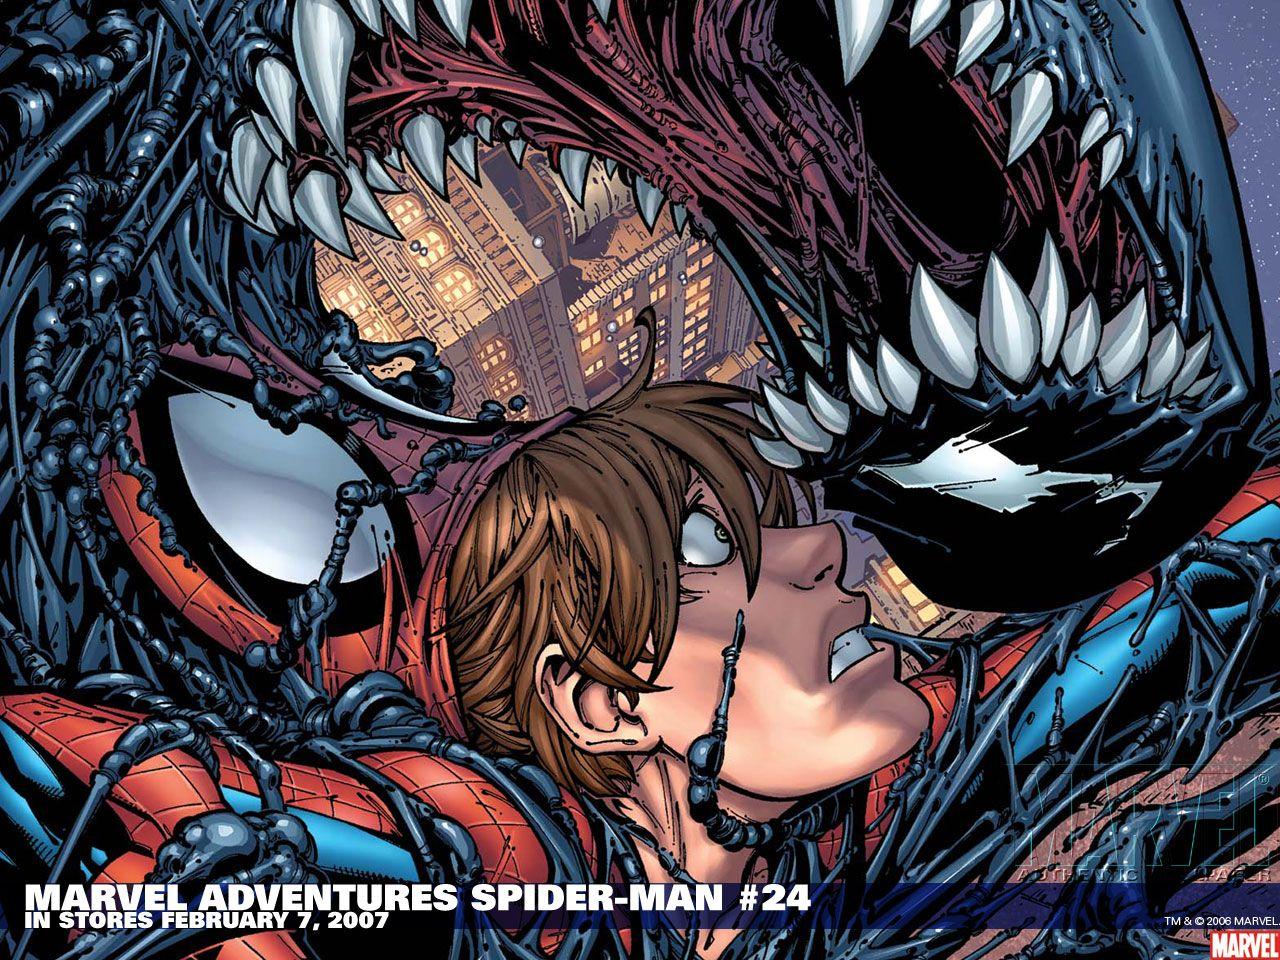 Download the Spiderman or Venom Wallpaper, Spiderman or Venom iPhone